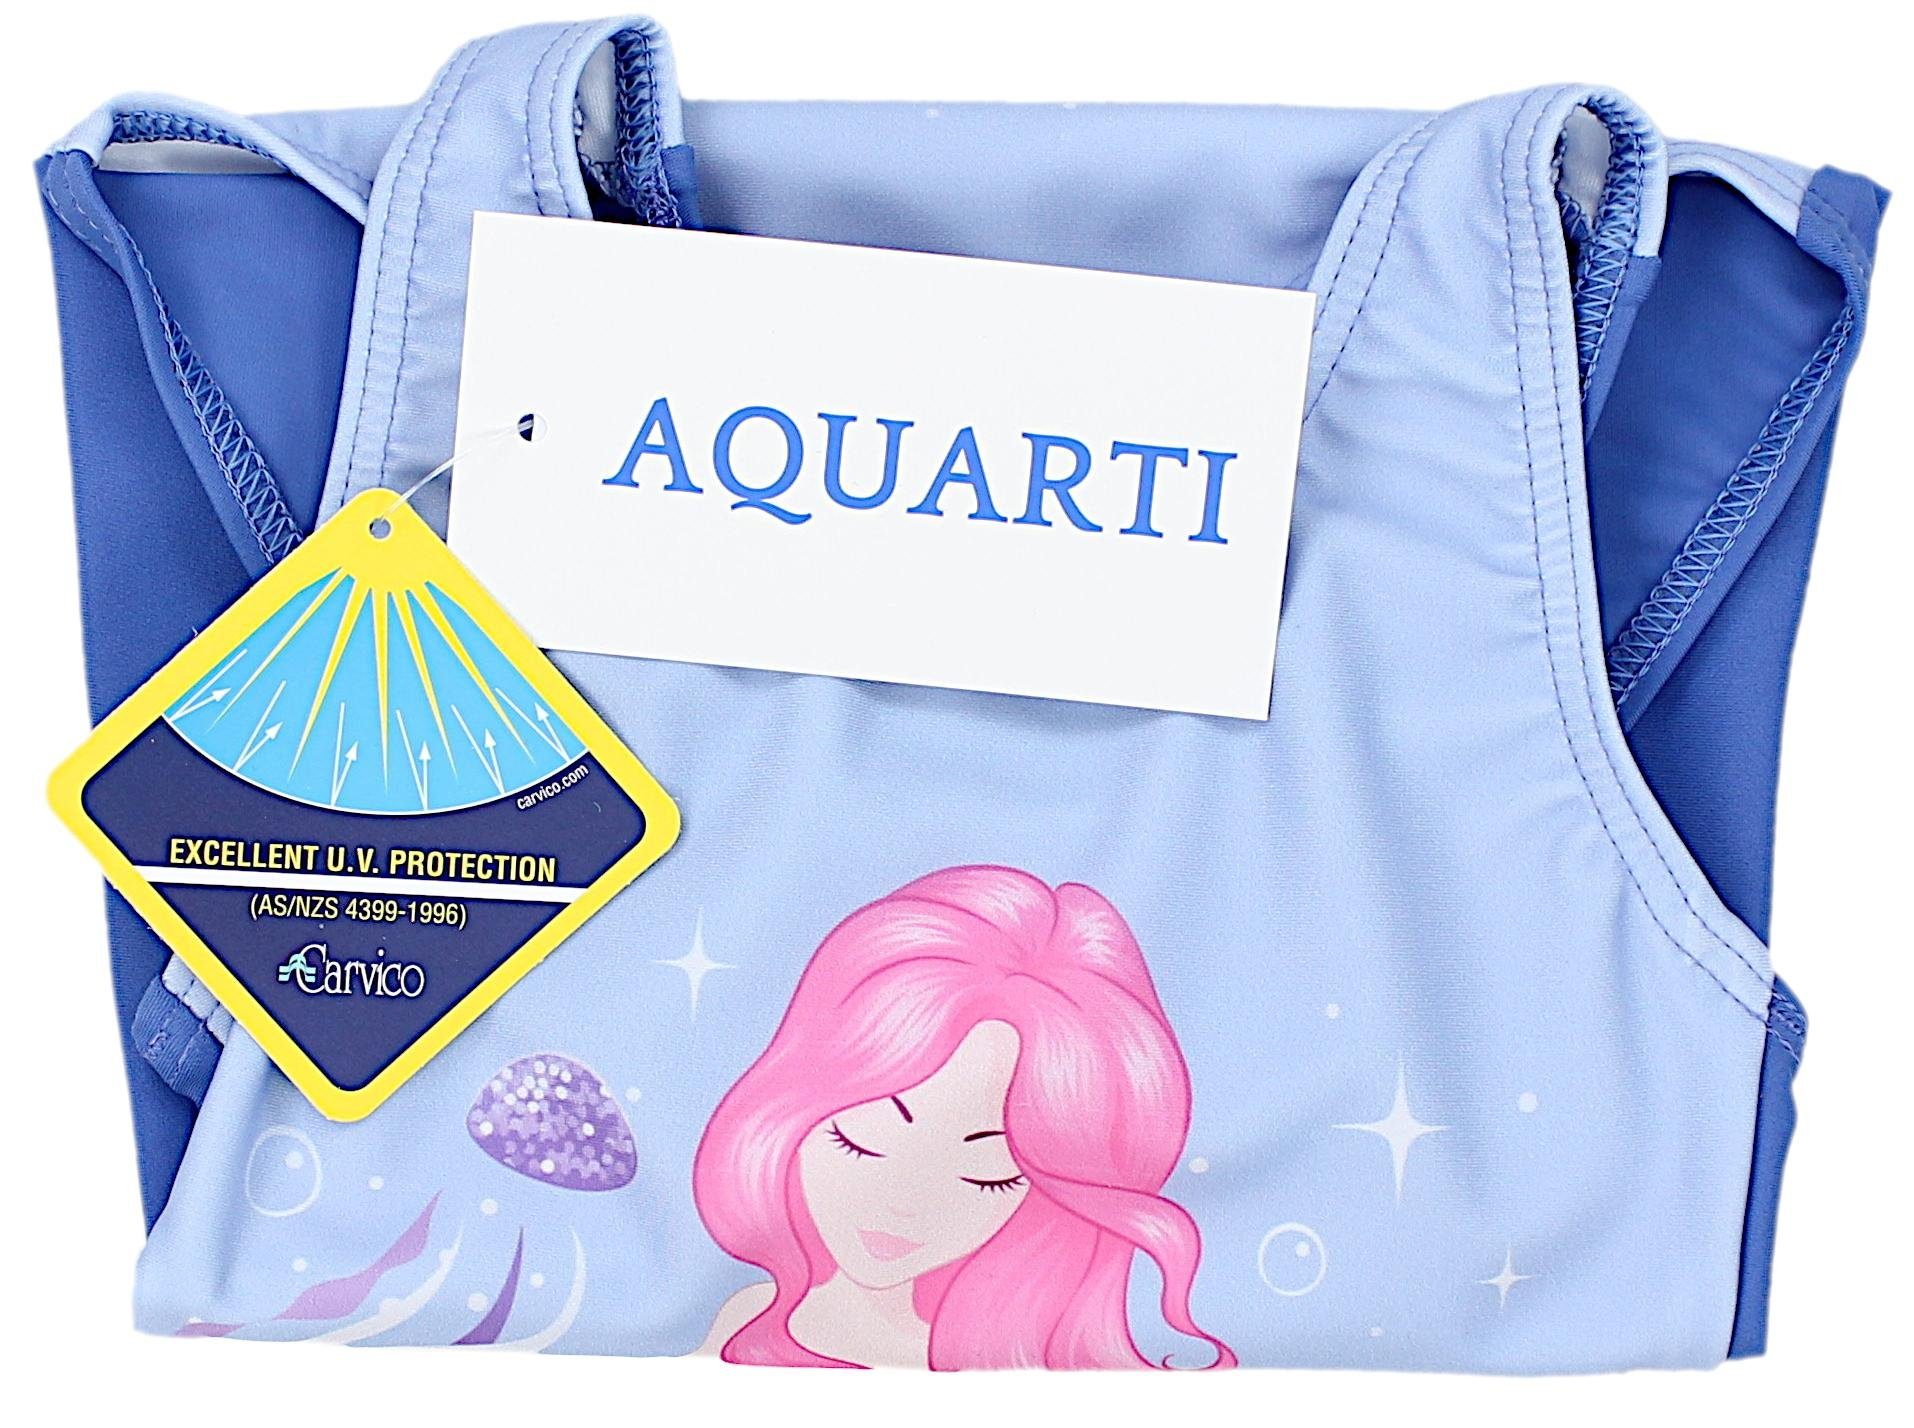 Meerjungfrau Print Ringerrücken mit Blau/Pink/Türkis Wasser Badeanzug Aquarti im Aquarti Mädchen Badeanzug